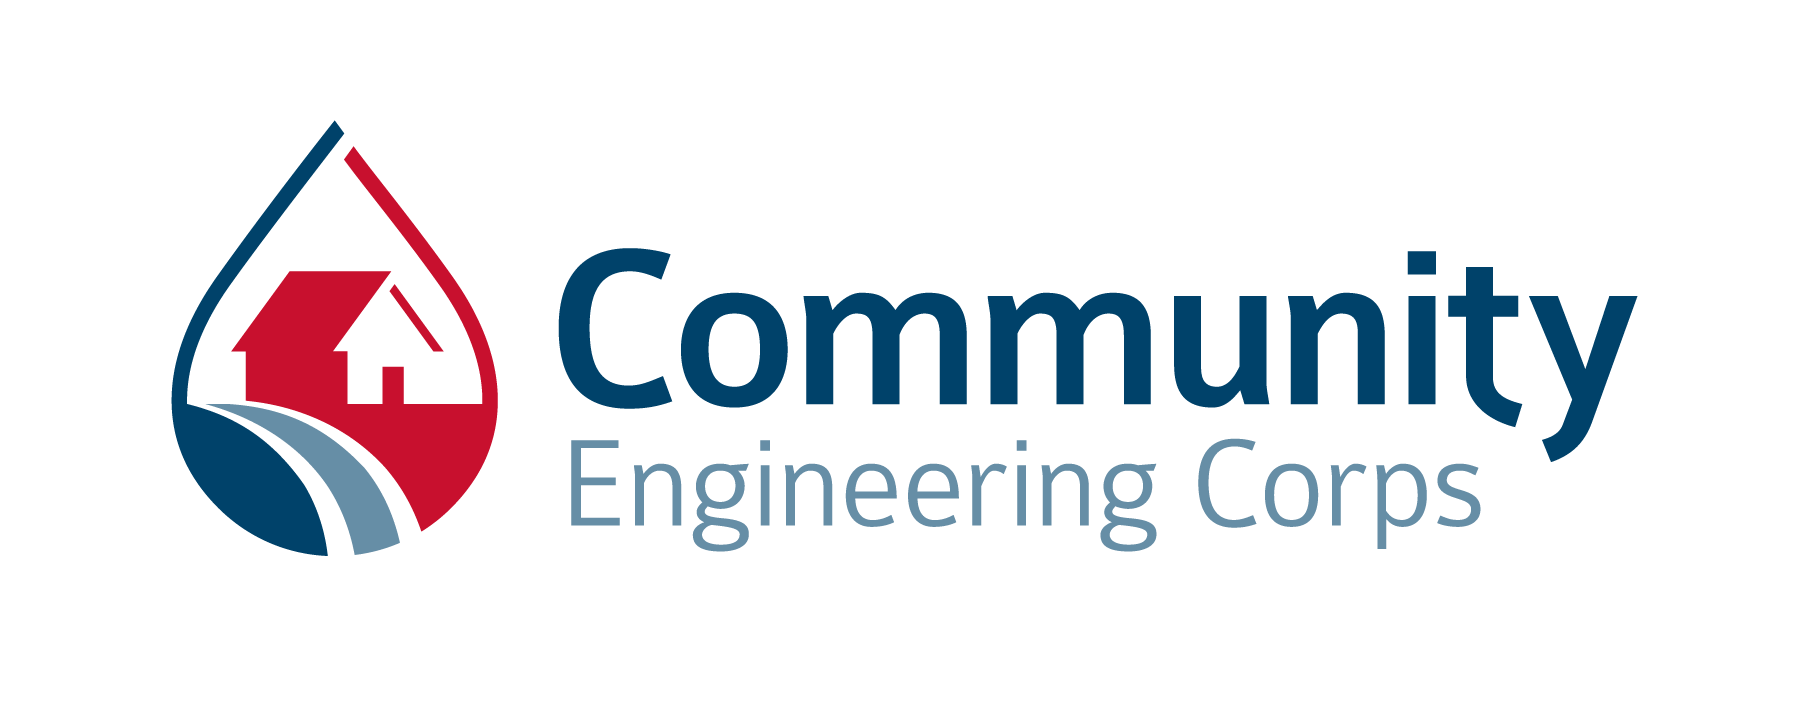 Community Engineering Corps. 